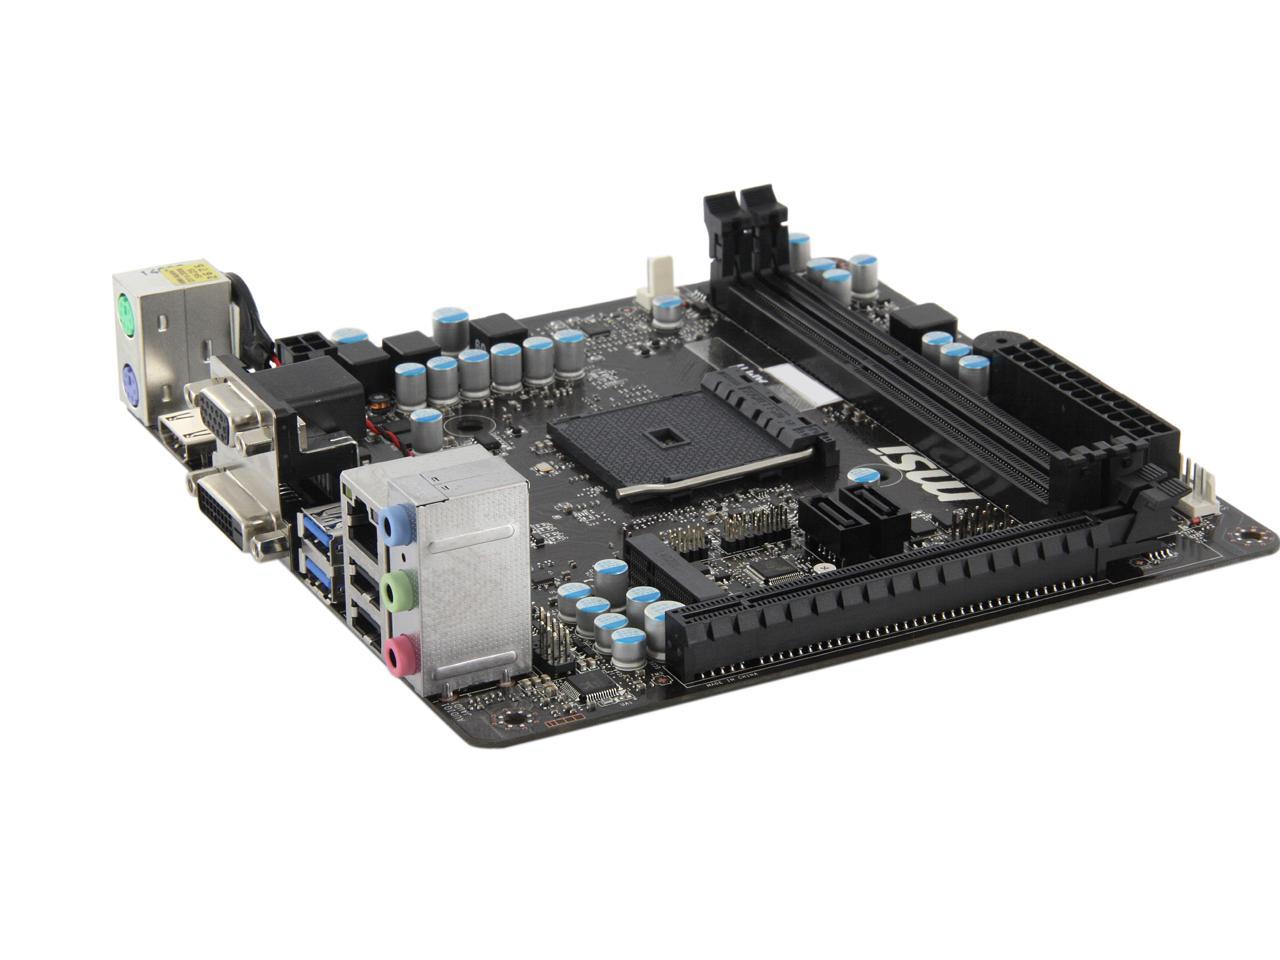 MSI AM1I AM1 Mini ITX AMD Motherboard - Newegg.com